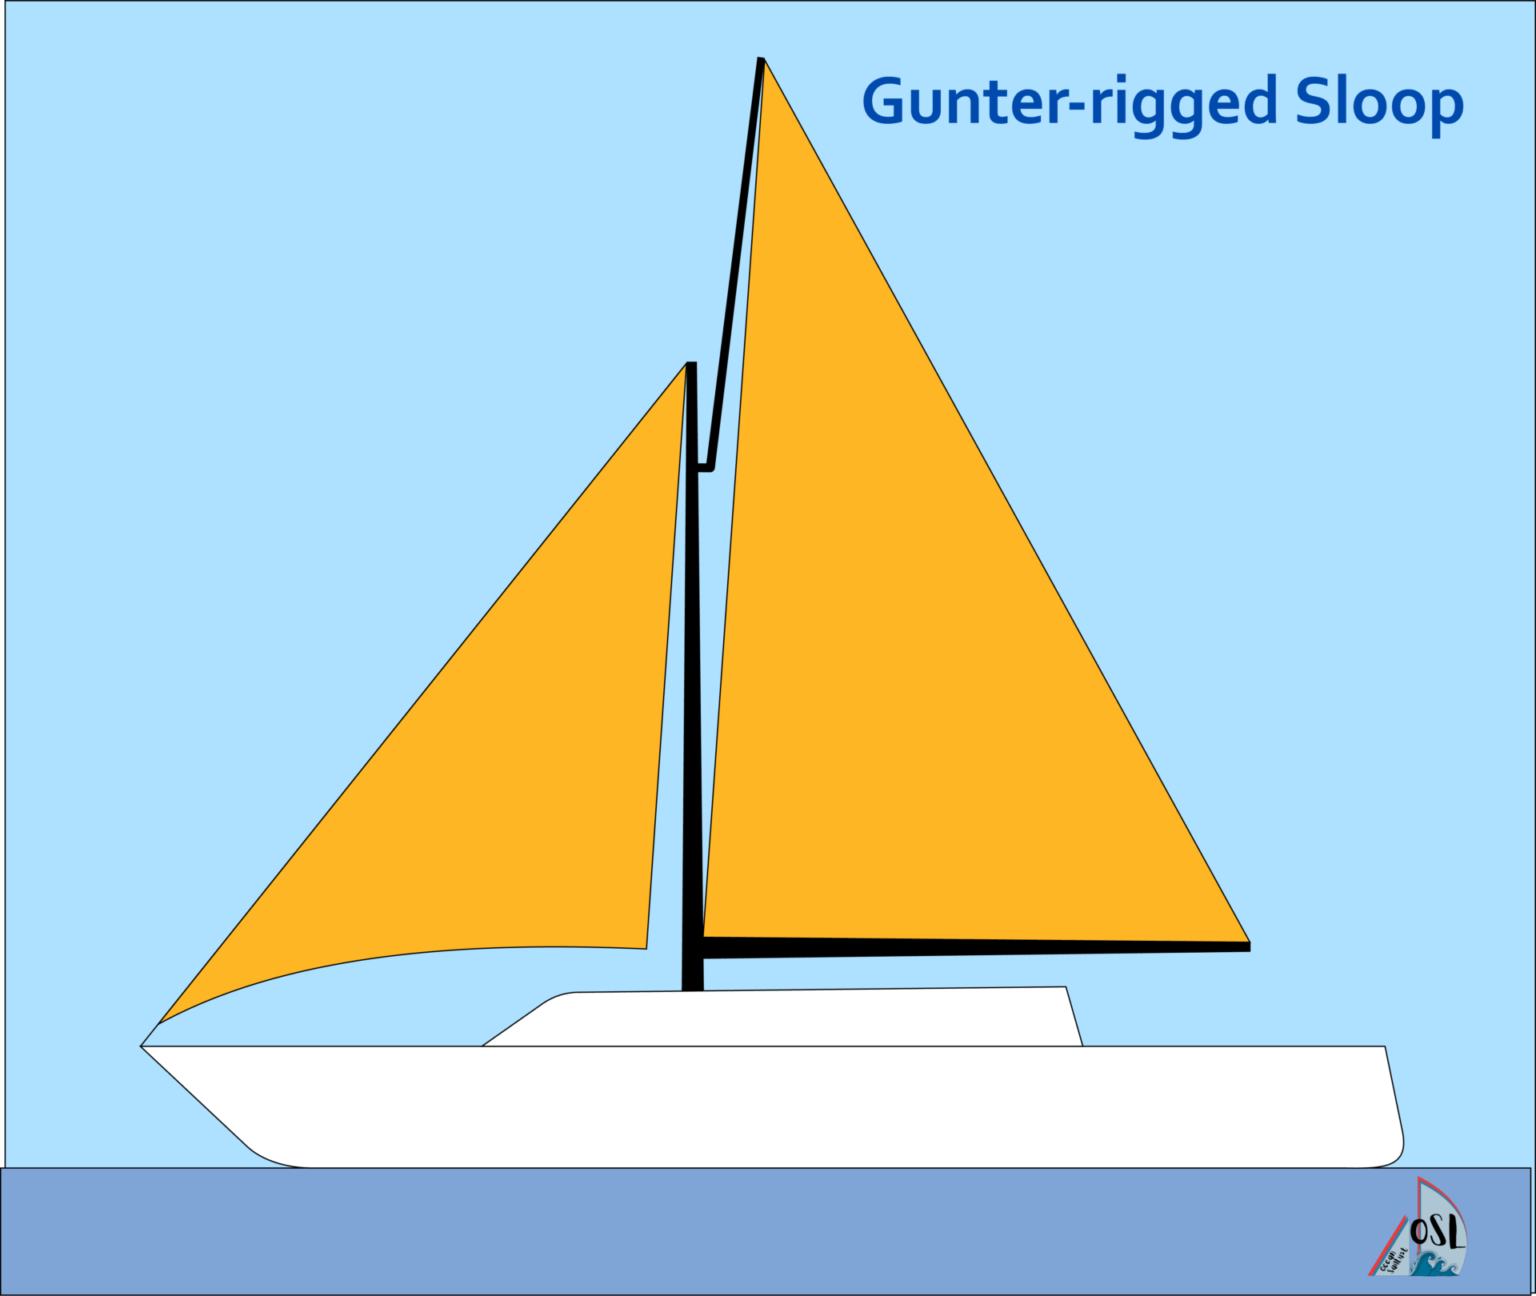 sloop definition sailboat